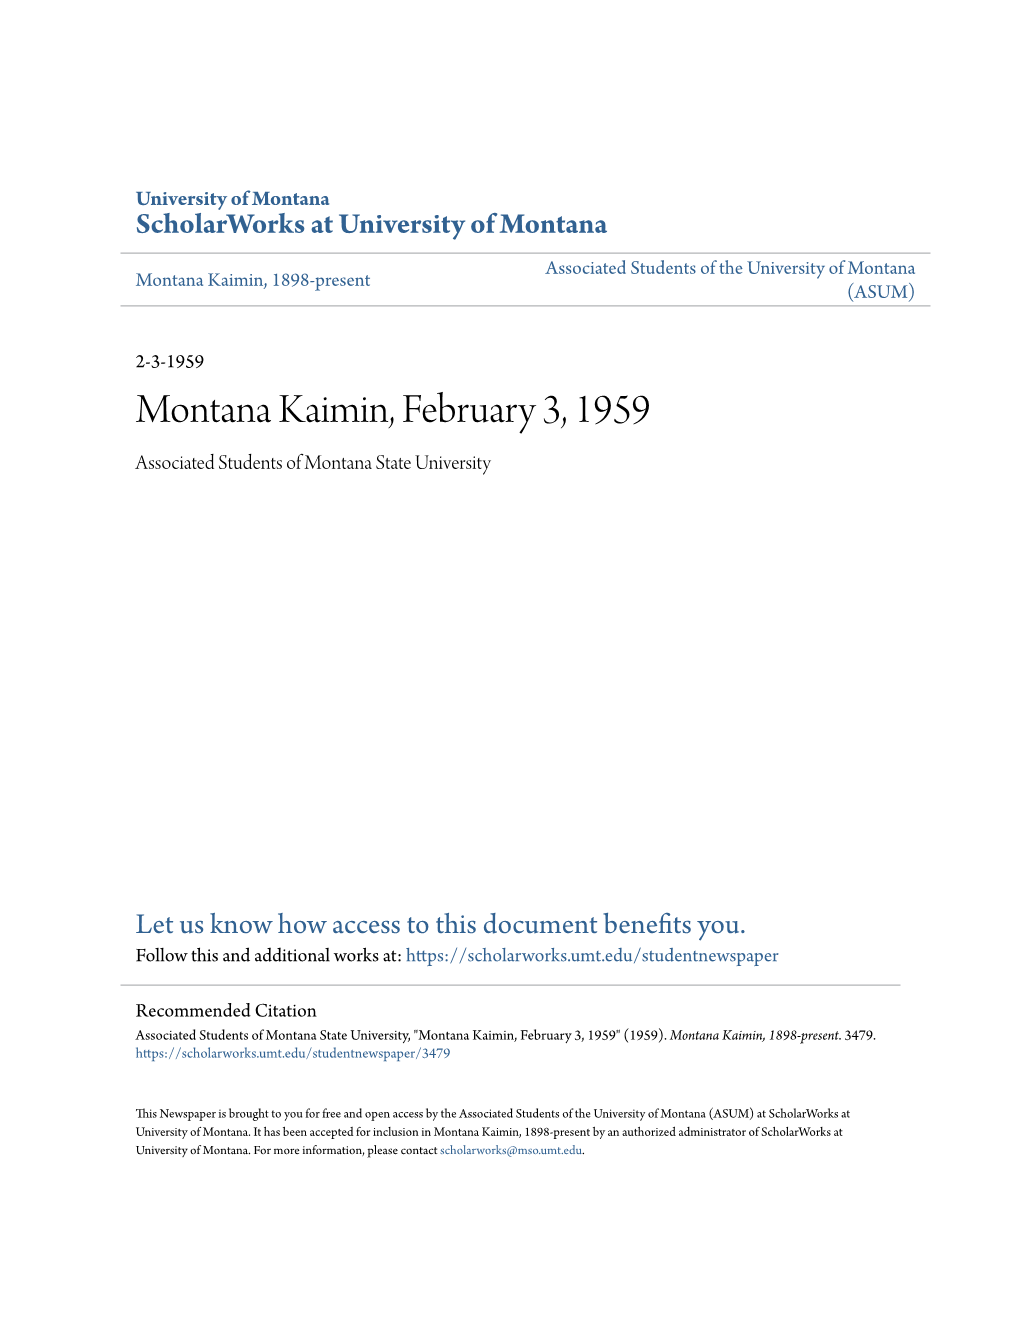 Montana Kaimin, February 3, 1959 Associated Students of Montana State University